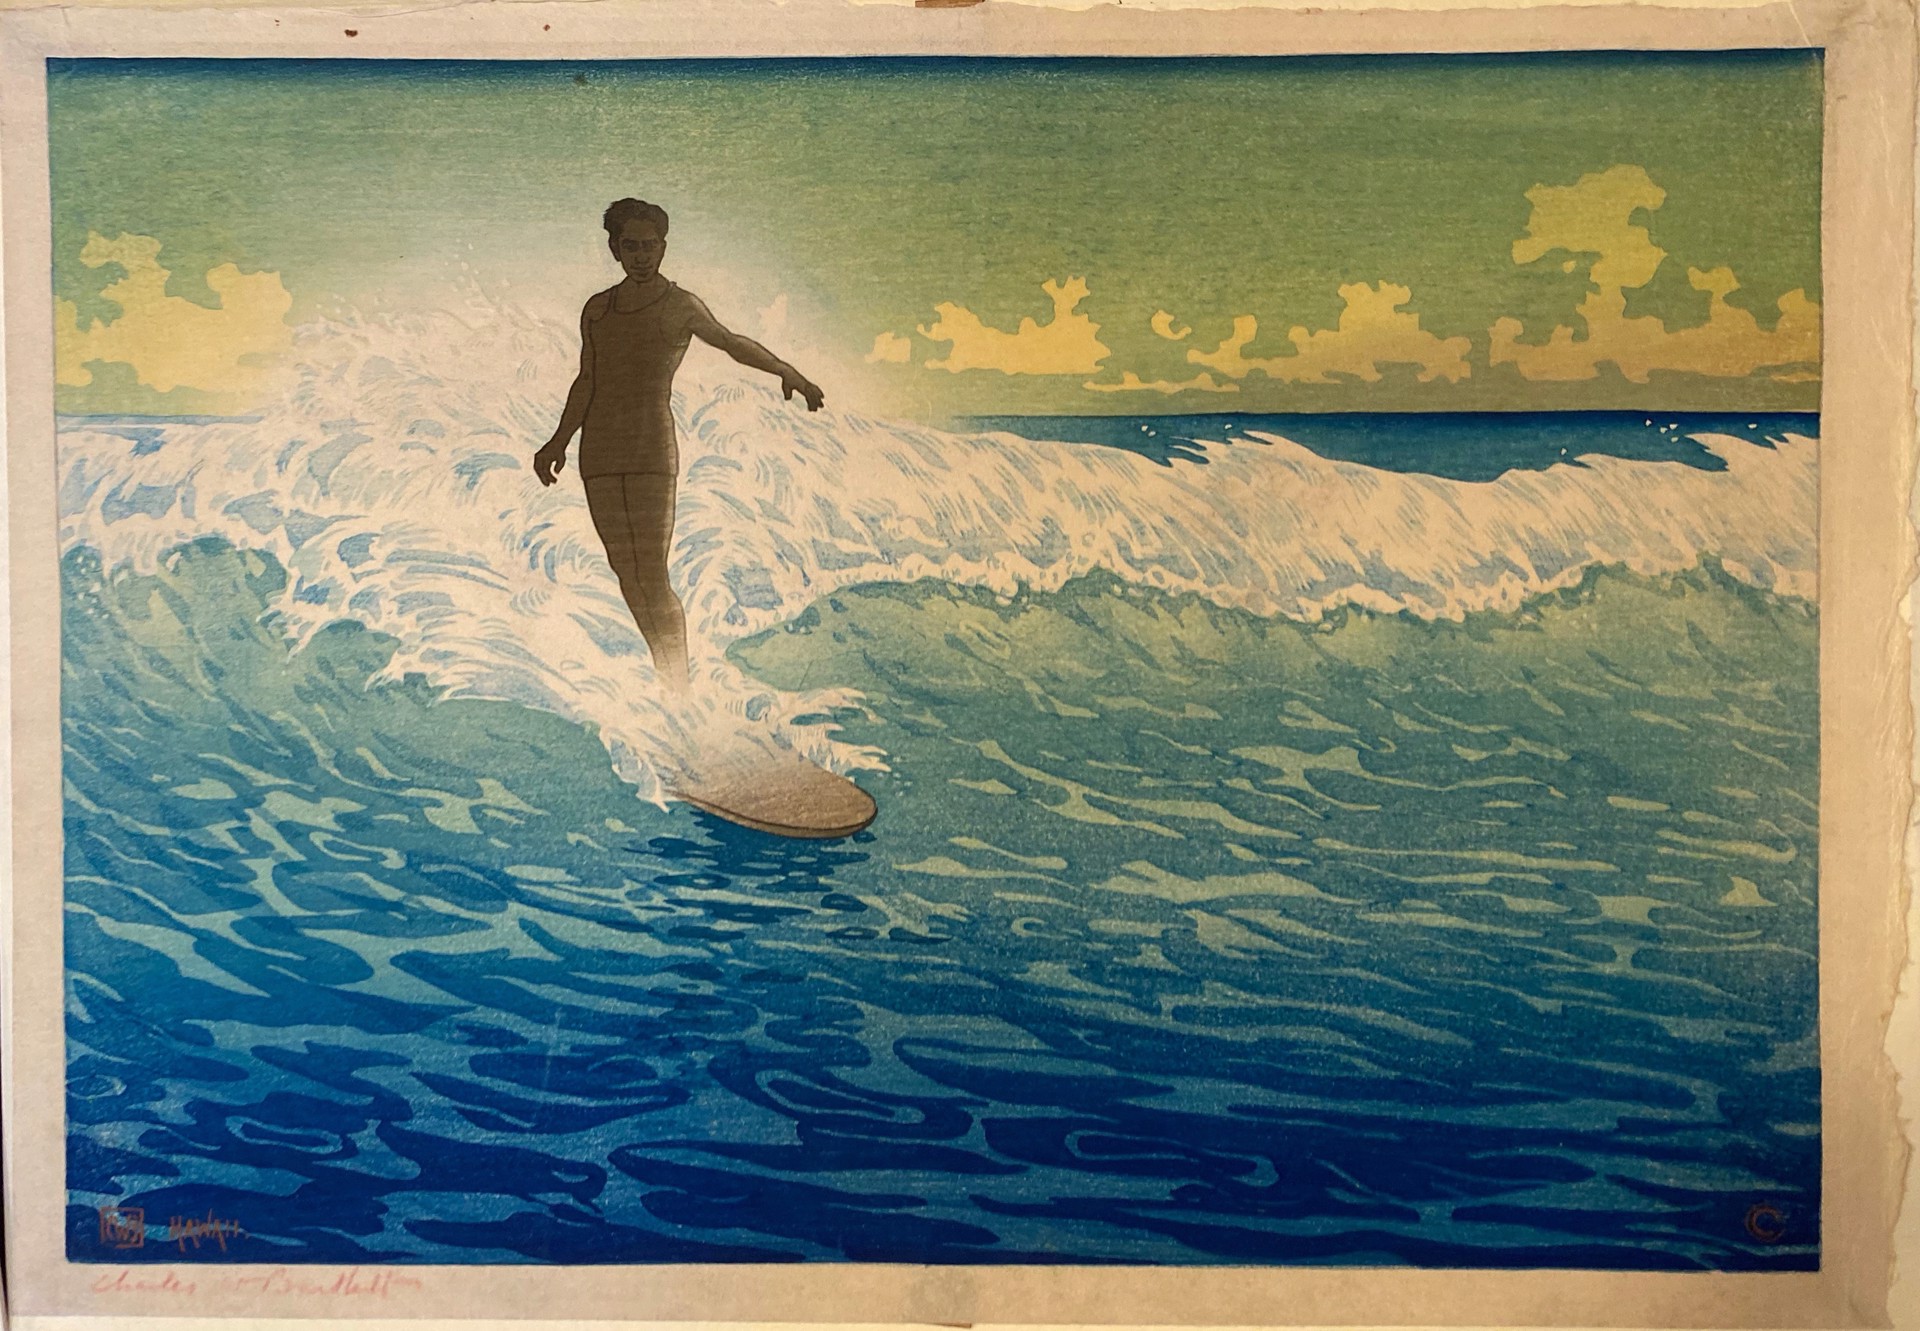 Surfrider, Duke Kahanamoku by Charles Bartlett